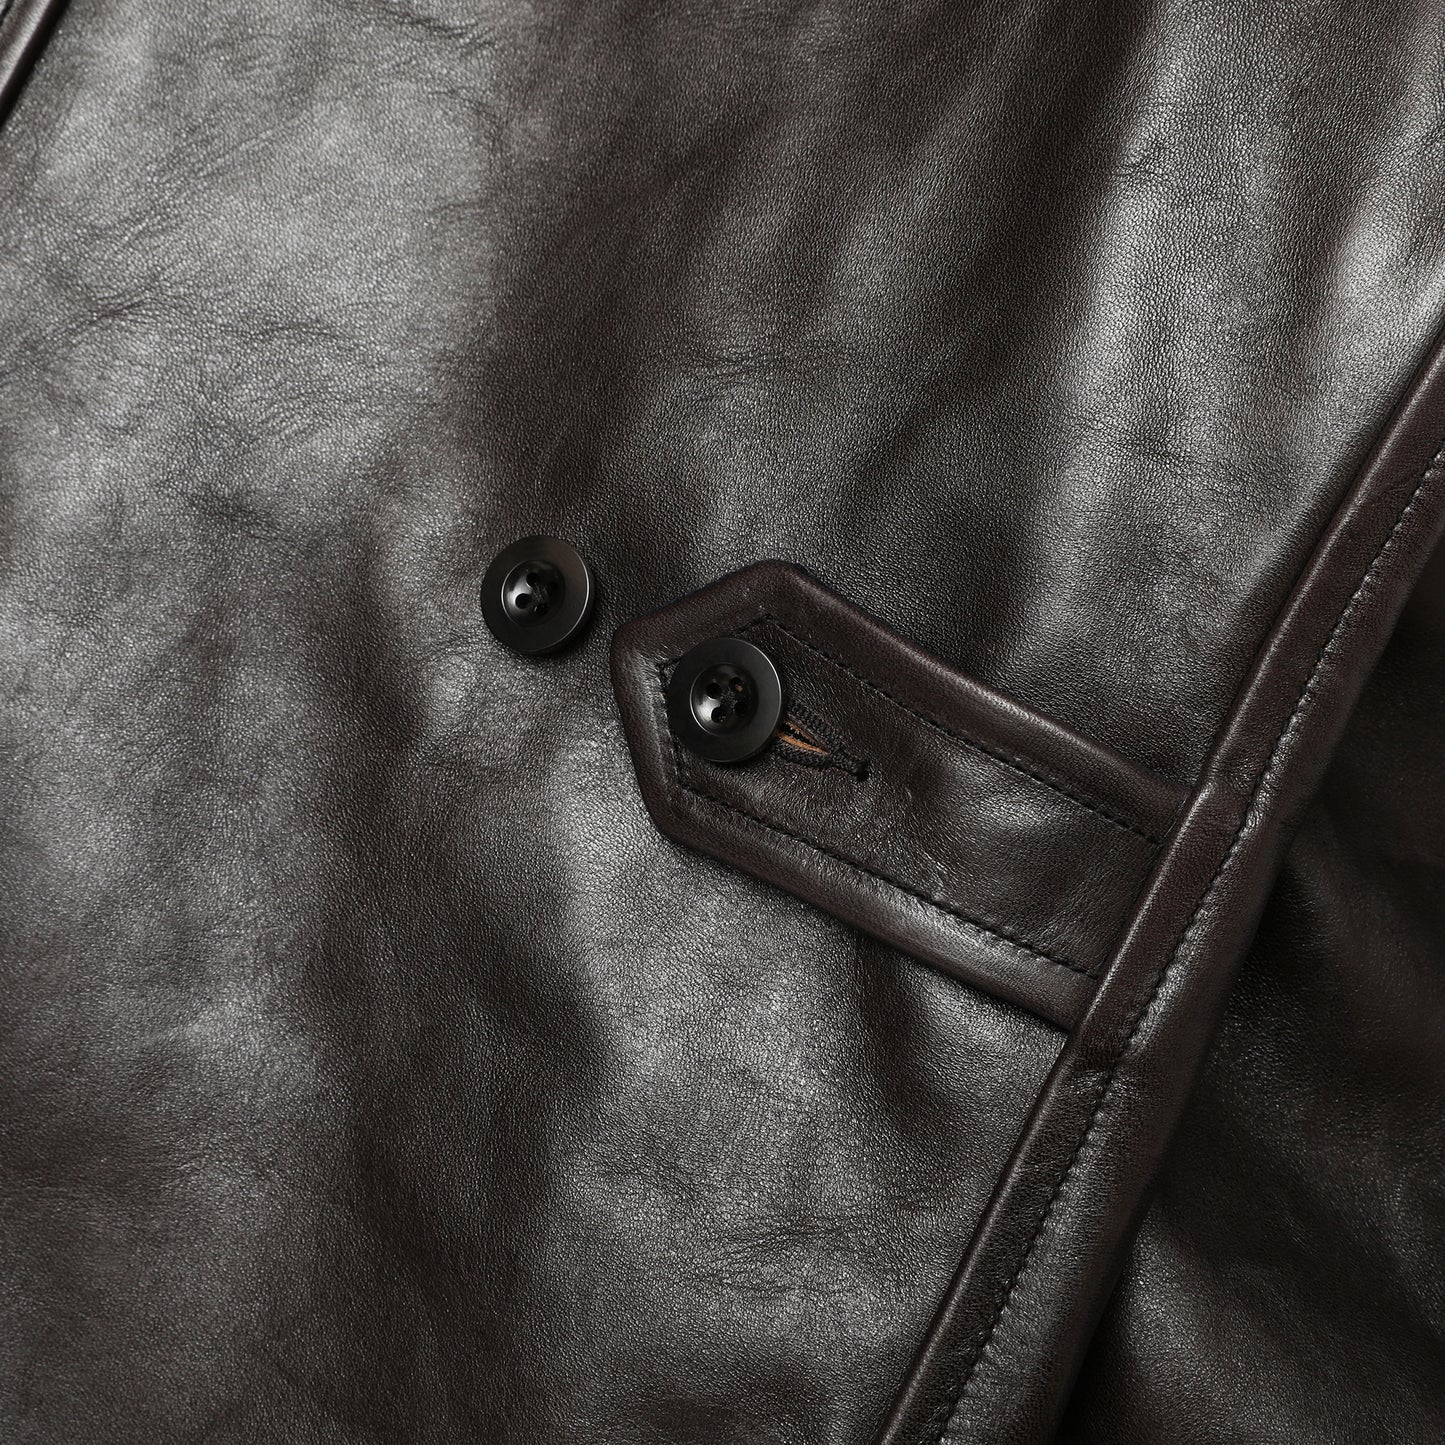 COLIMBO STOCKMANS' LEATHER COAT -30's Style Leather Work Coat- Horse Hide Black【ZY-0116】